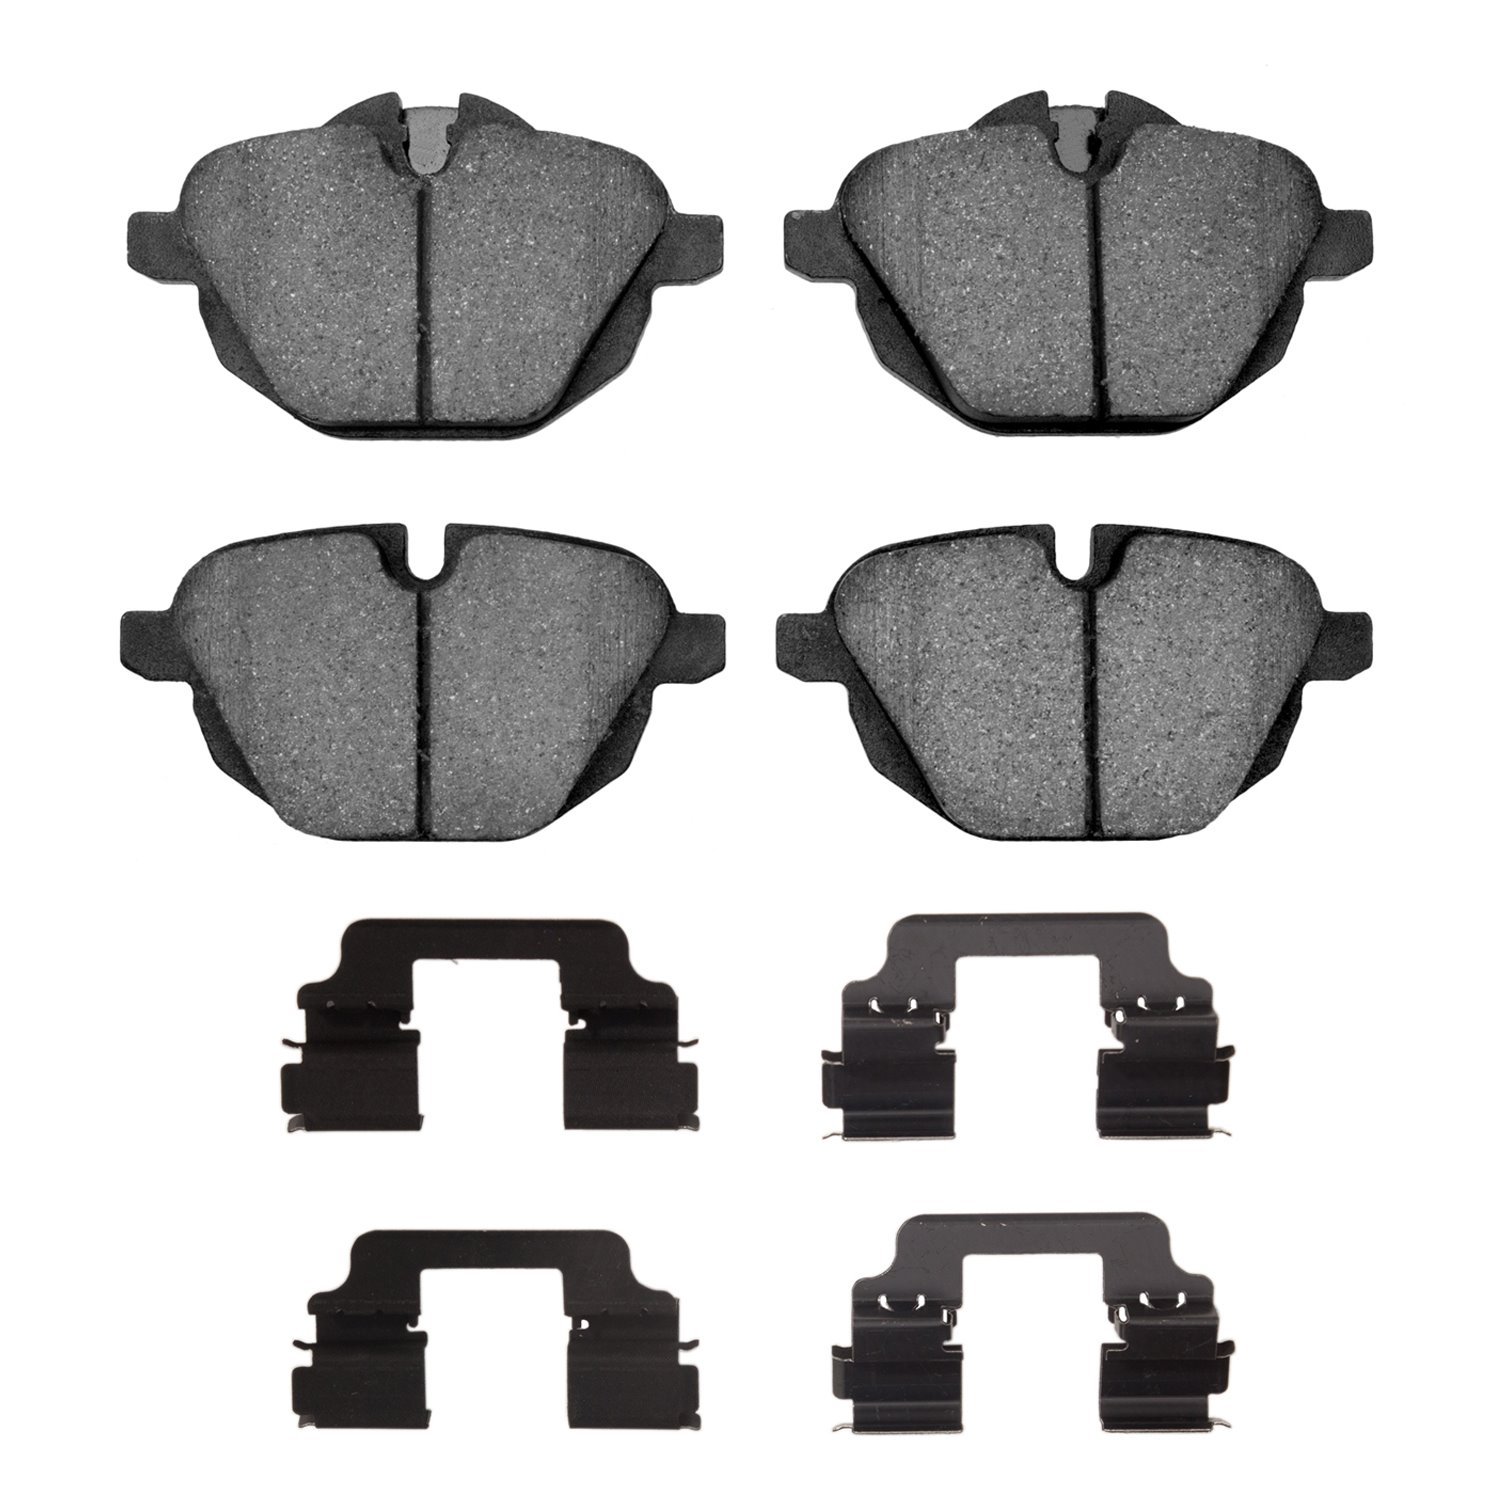 1311-1473-01 3000-Series Semi-Metallic Brake Pads & Hardware Kit, Fits Select BMW, Position: Rear